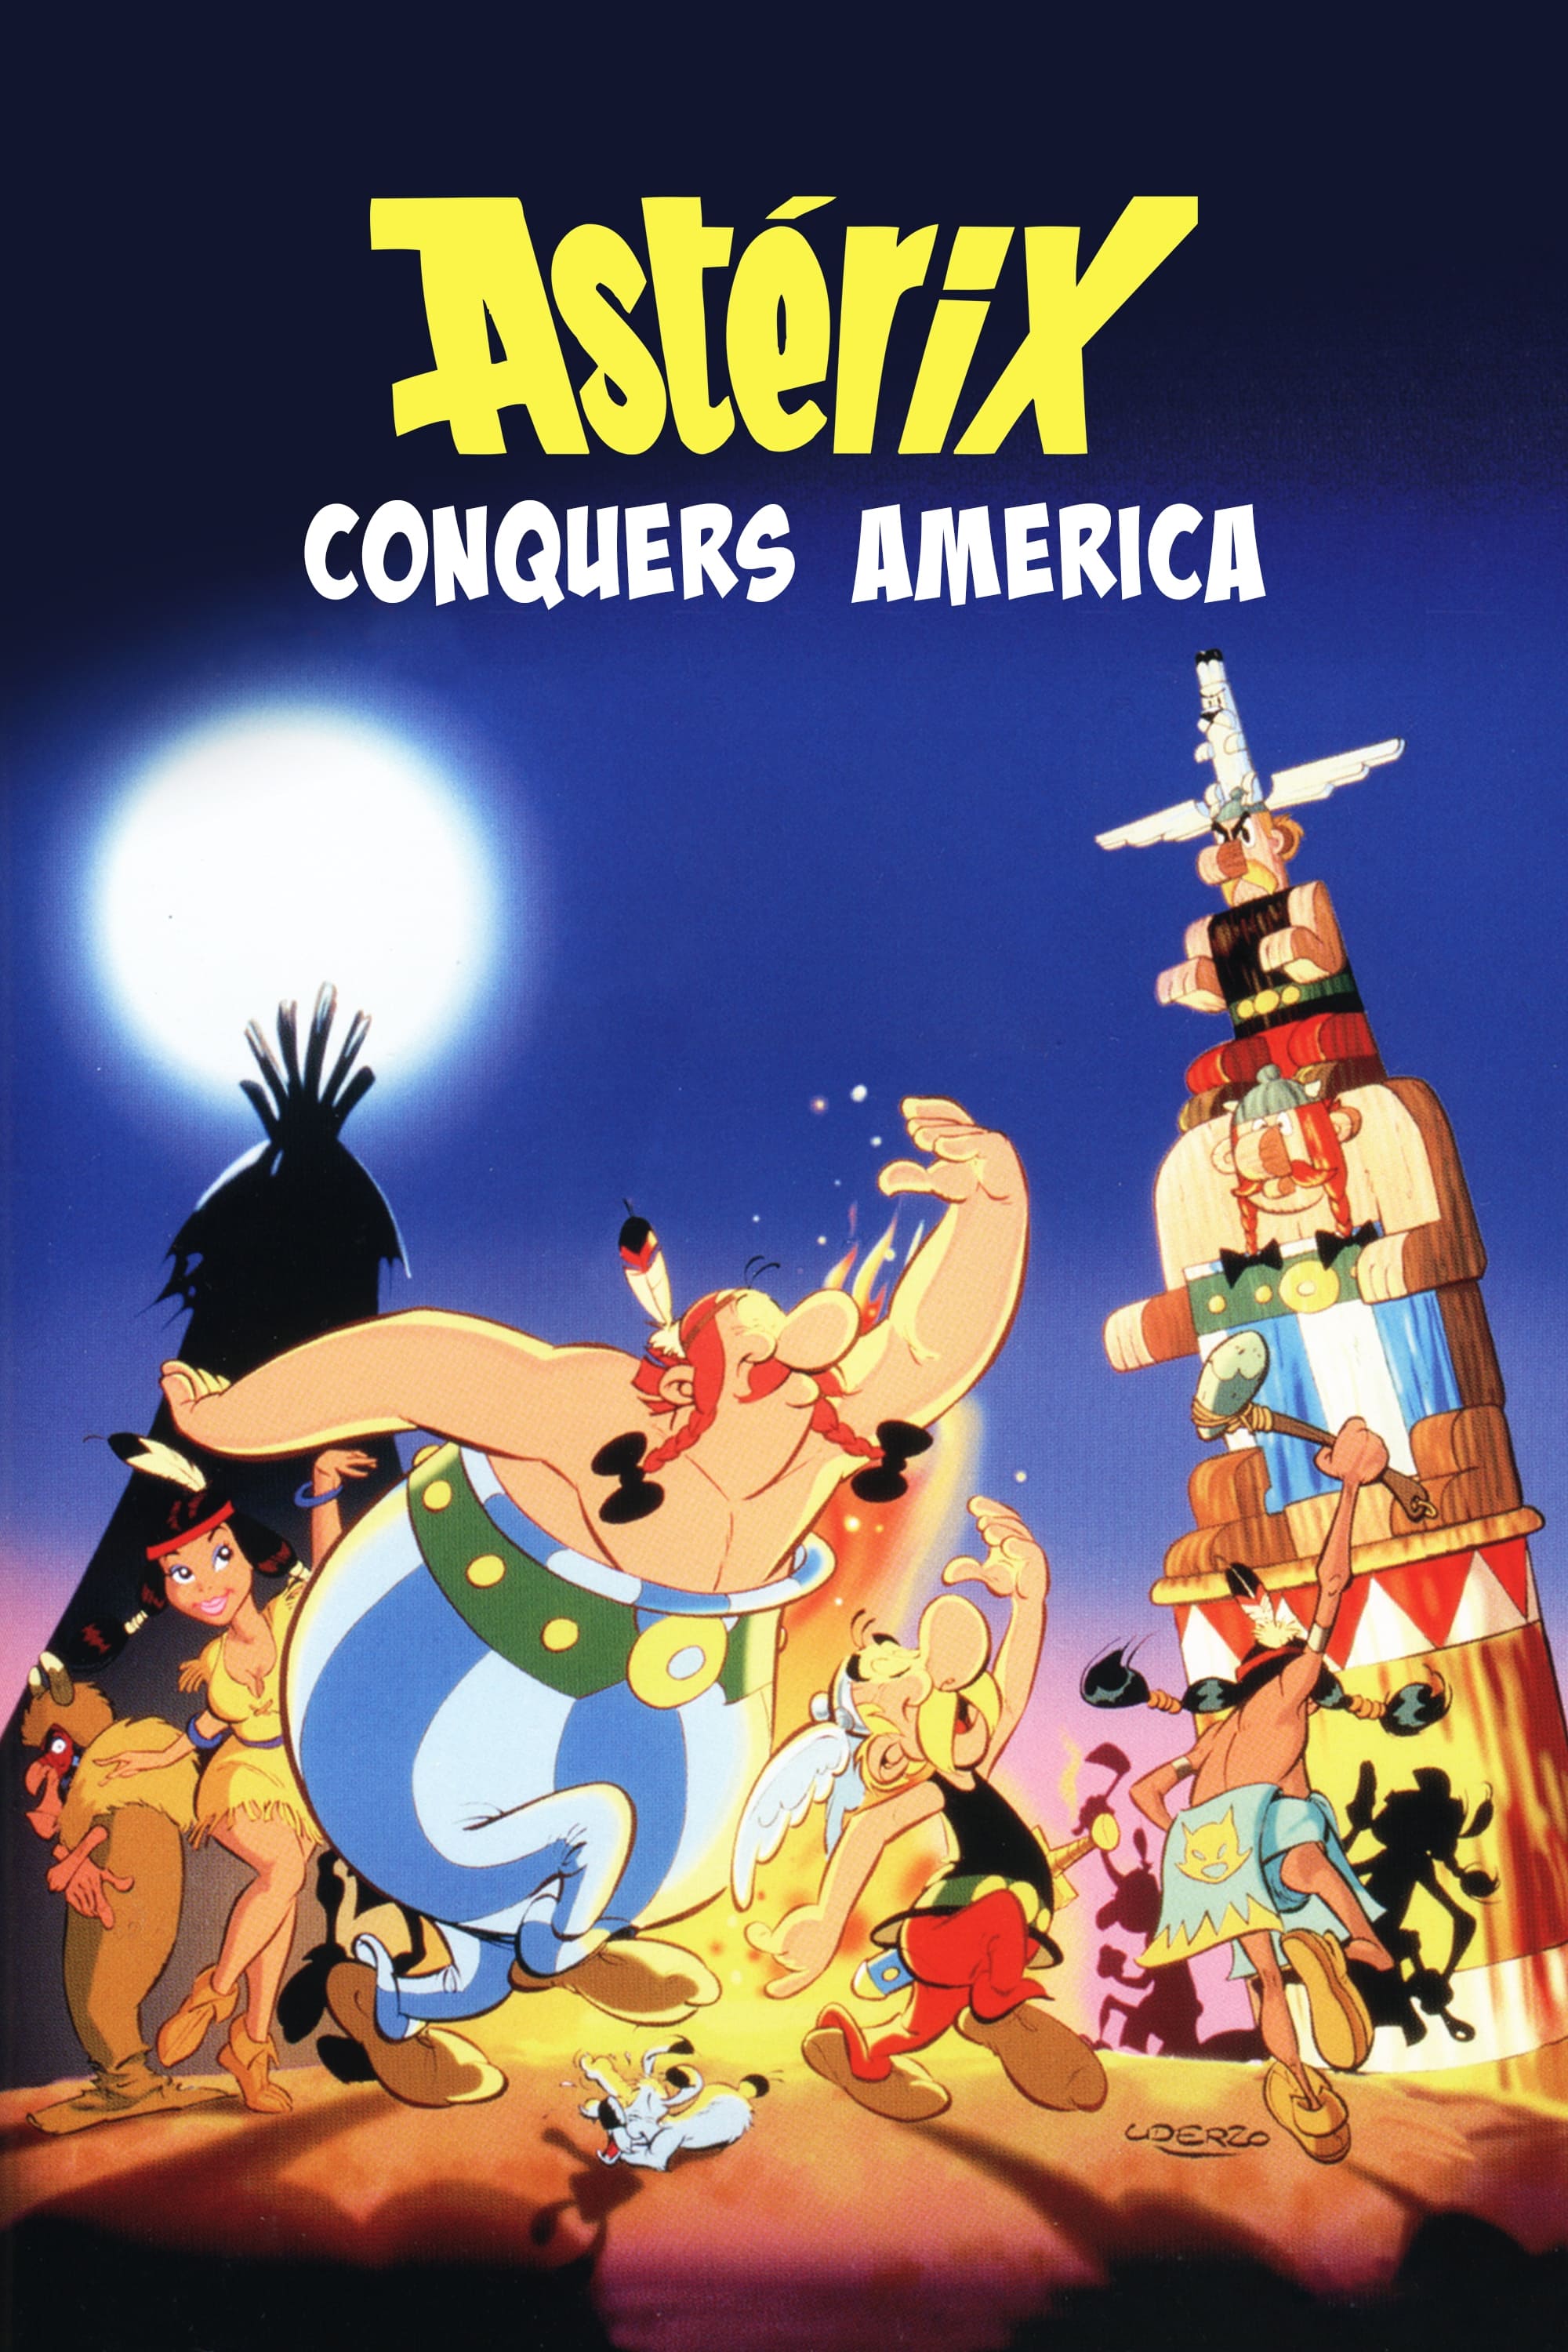 Asterix in Amerika (1994)